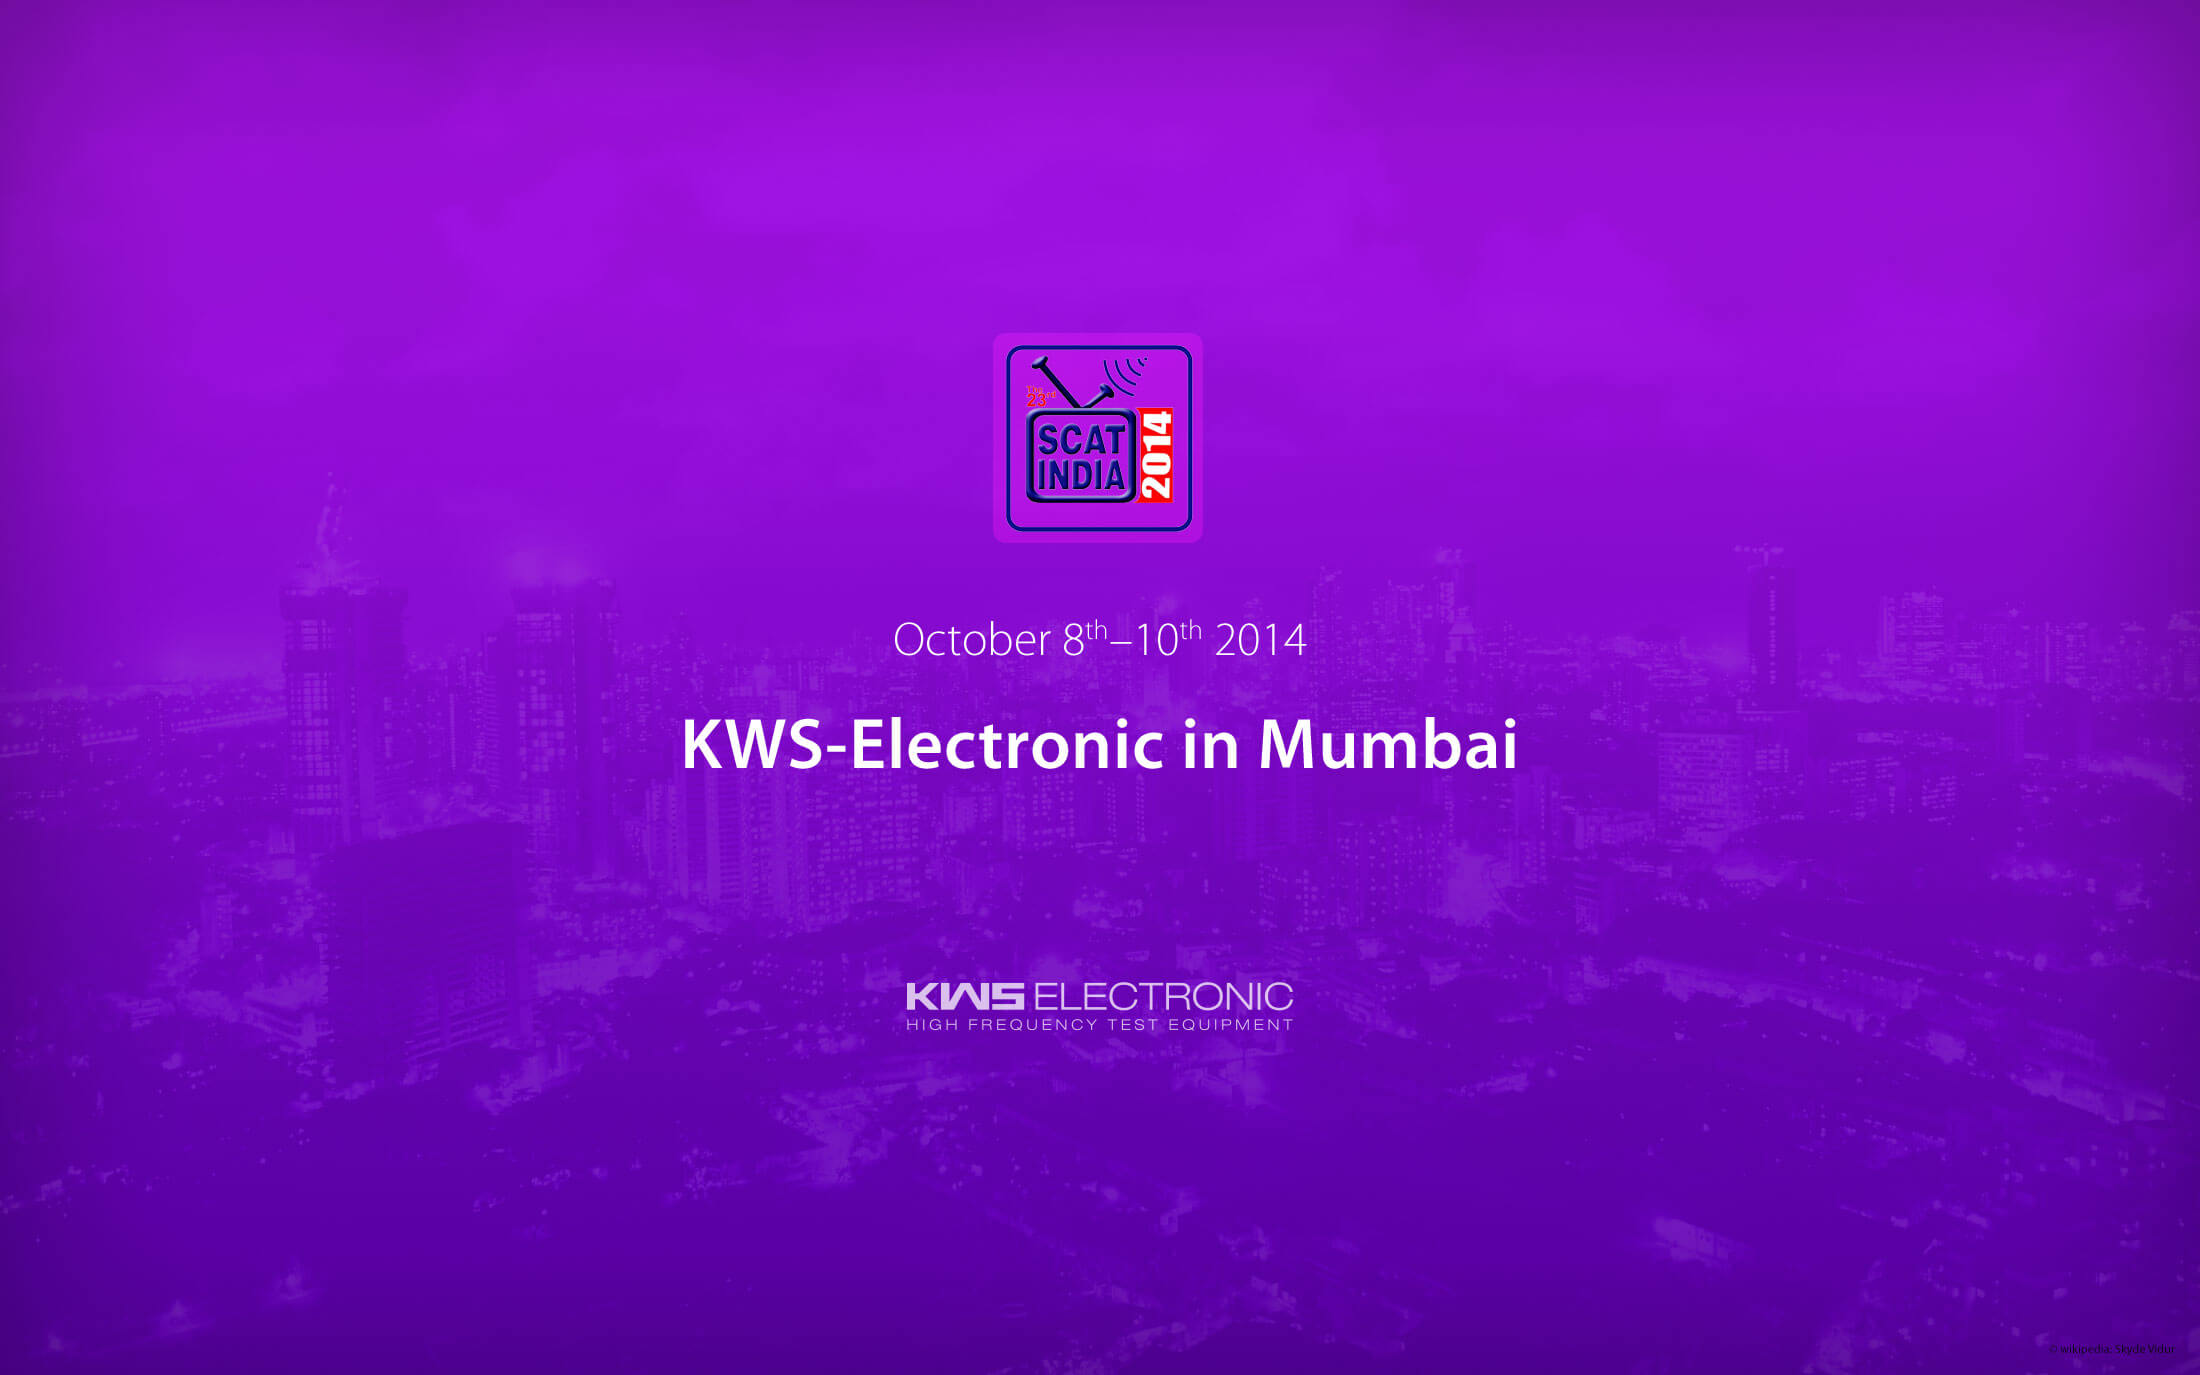 KWS-Electronic at SCAT India 2014 in Mumbai